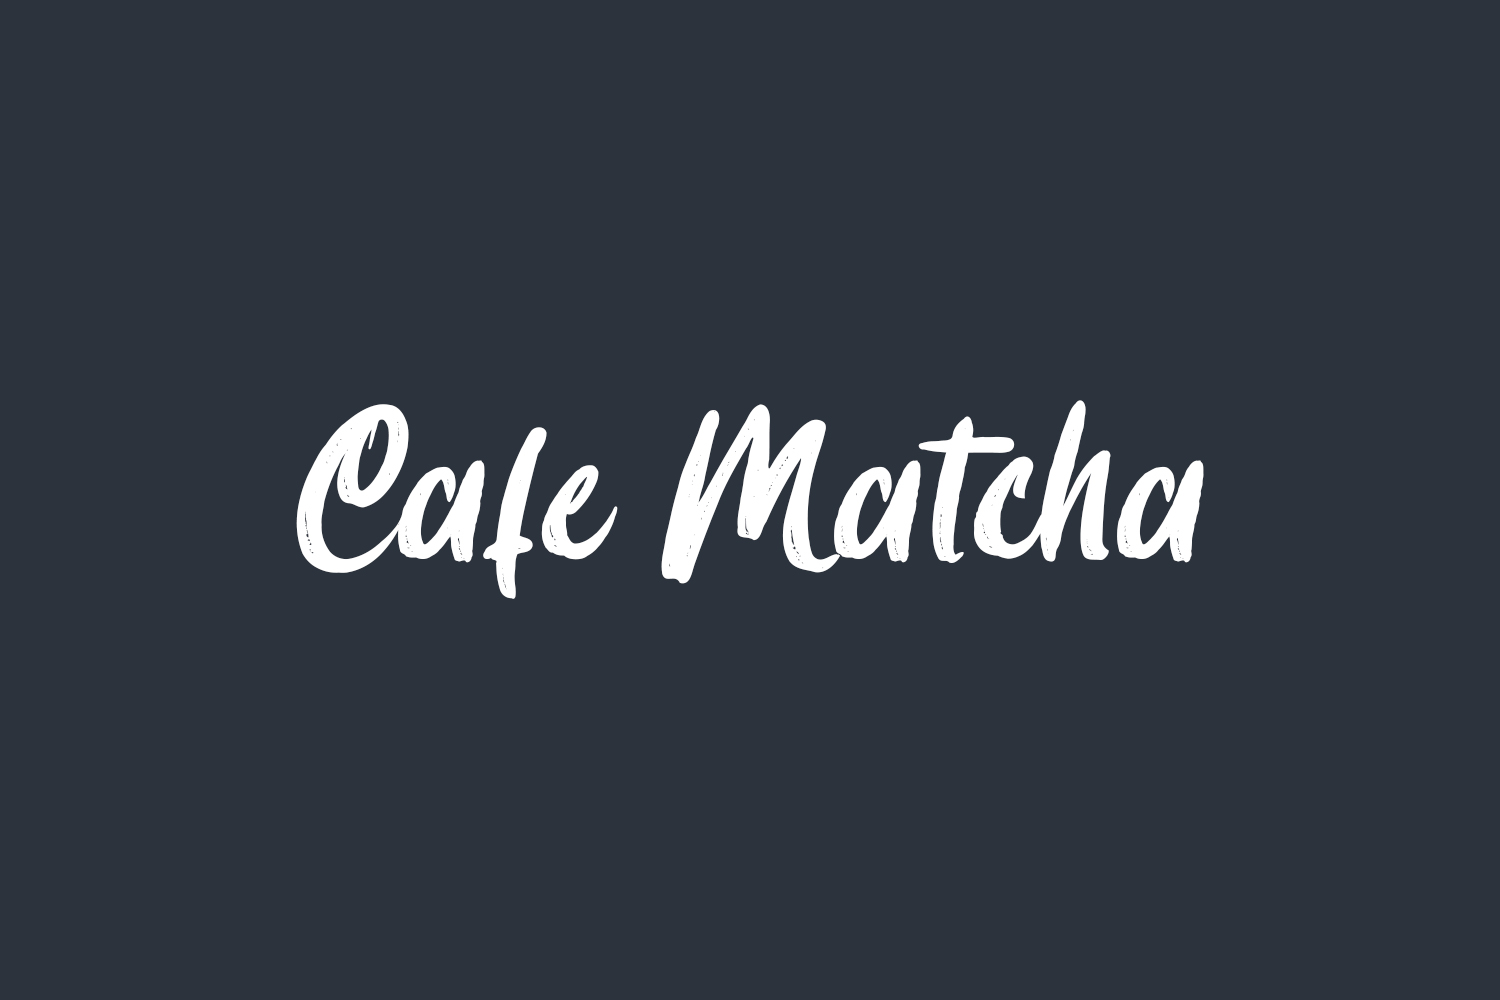 Cafe Matcha Free Font